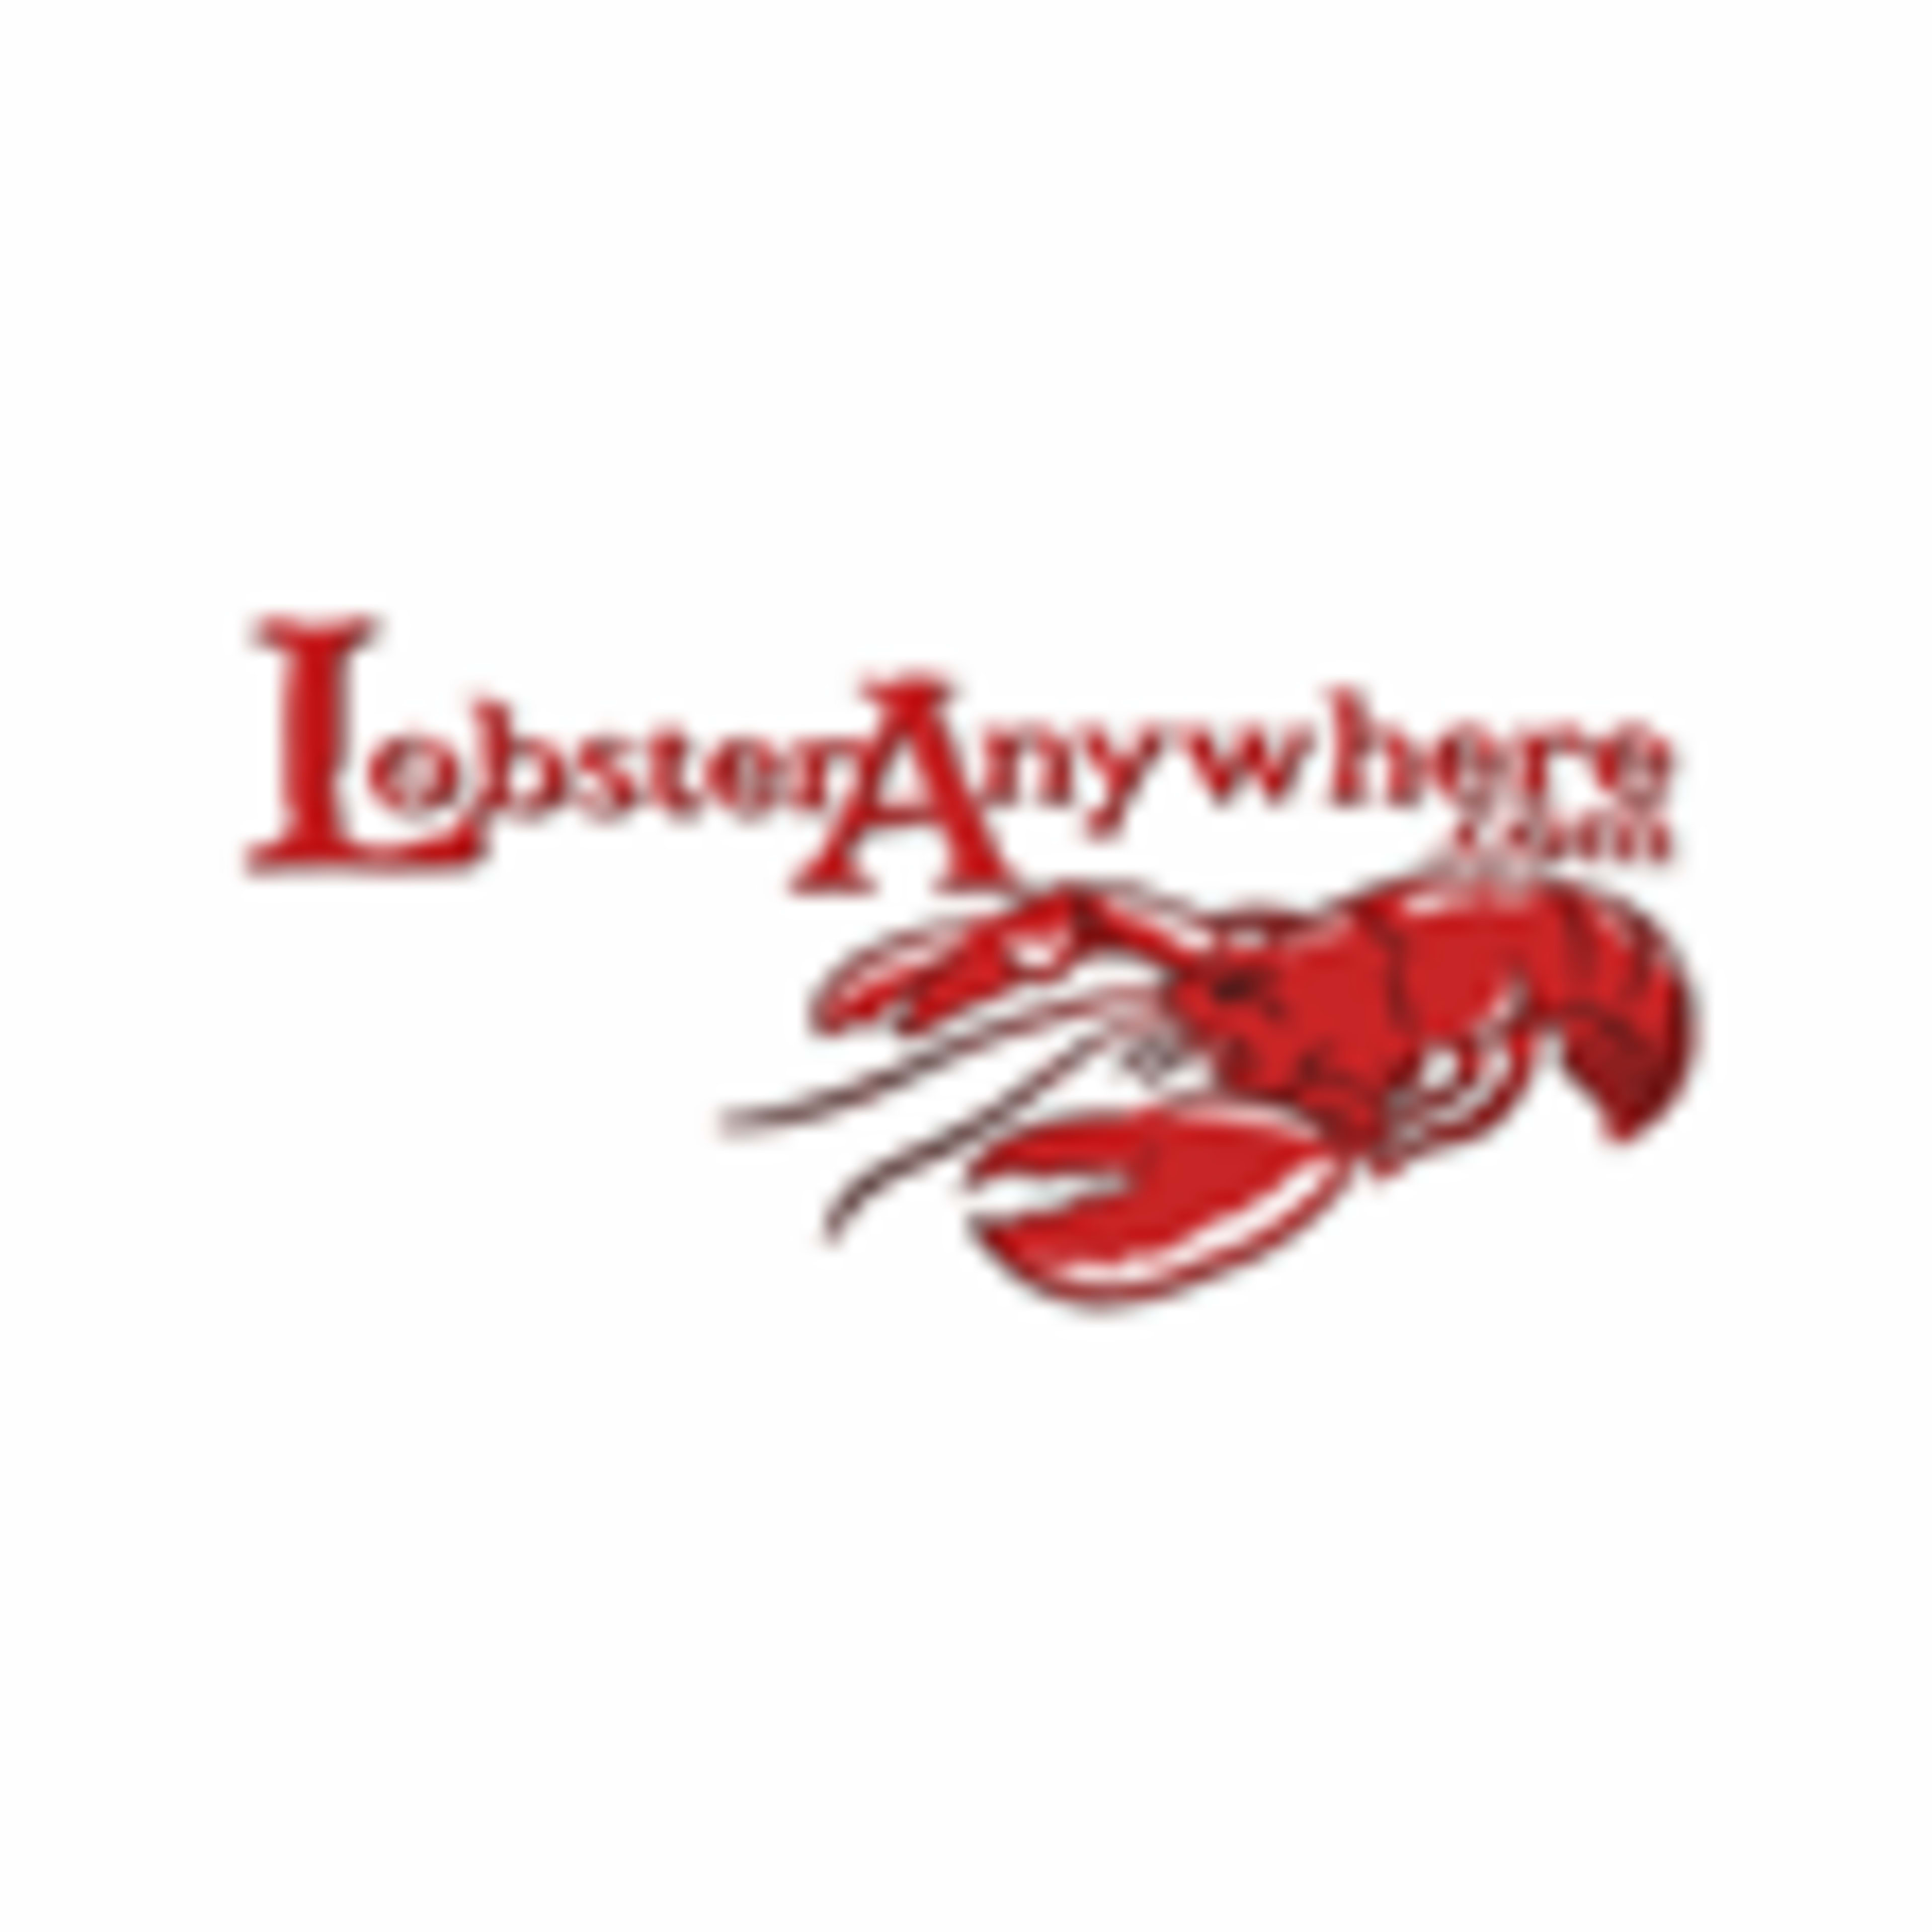 Lobster AnywhereCode